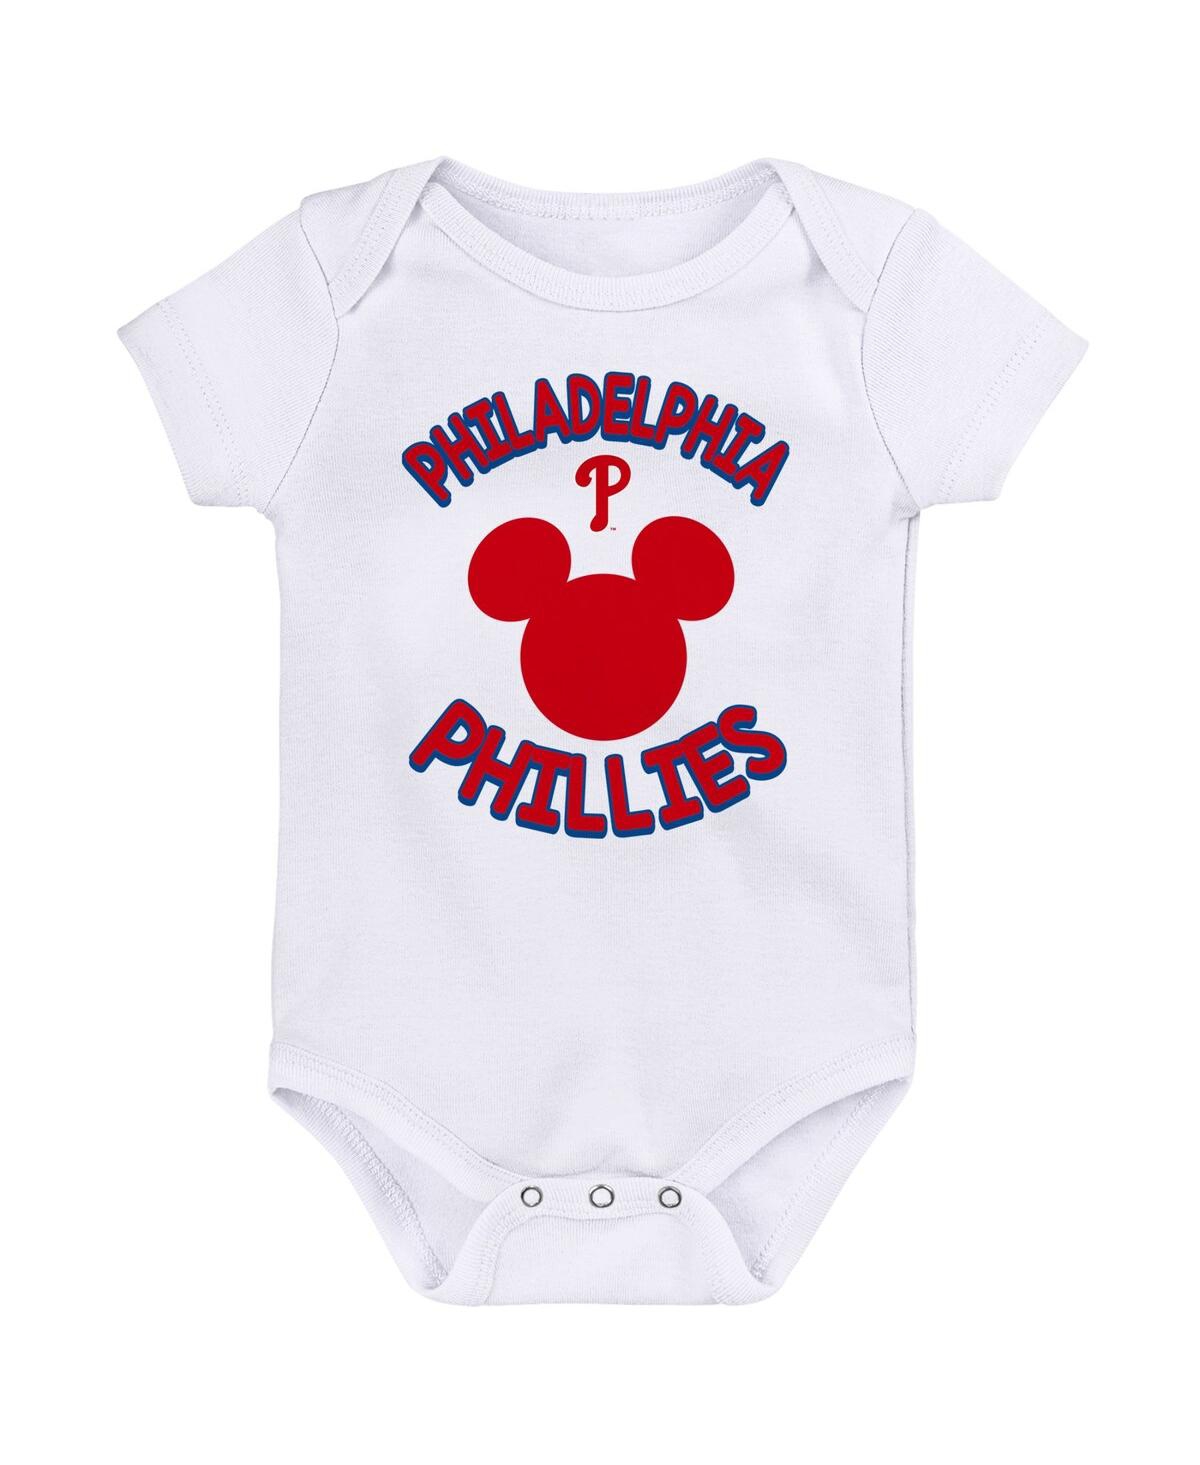 Shop Outerstuff Newborn Infant Mickey Mouse Philadelphia Phillies Three-pack Winning Team Bodysuit Set In Royal